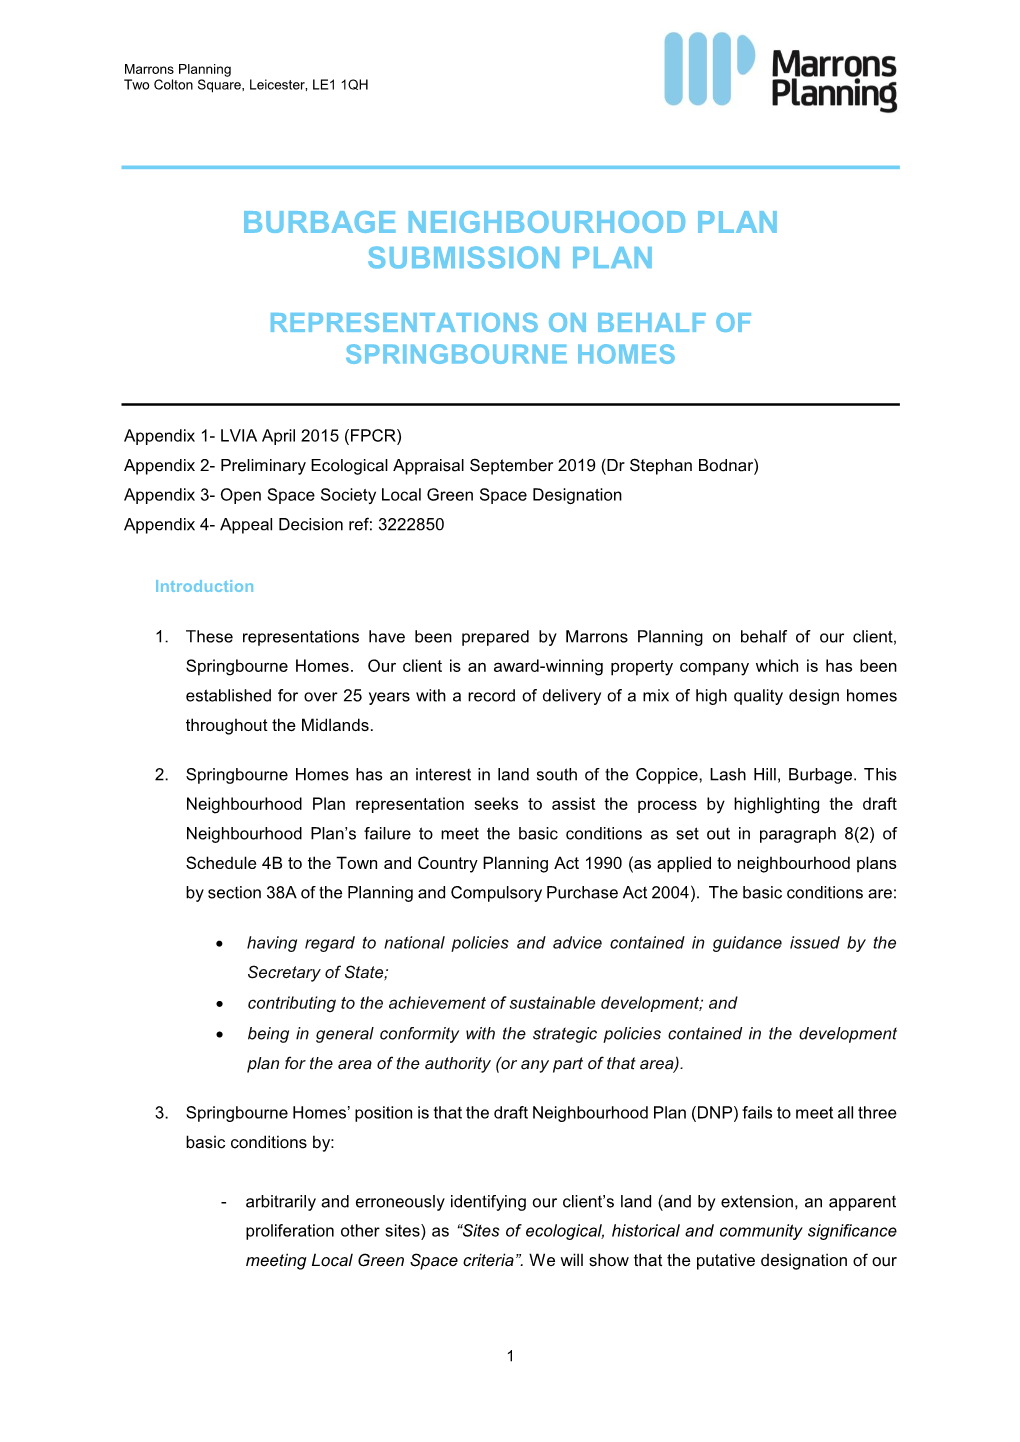 Burbage NDP Reg 16 Response Marrons for Springbourne Homes